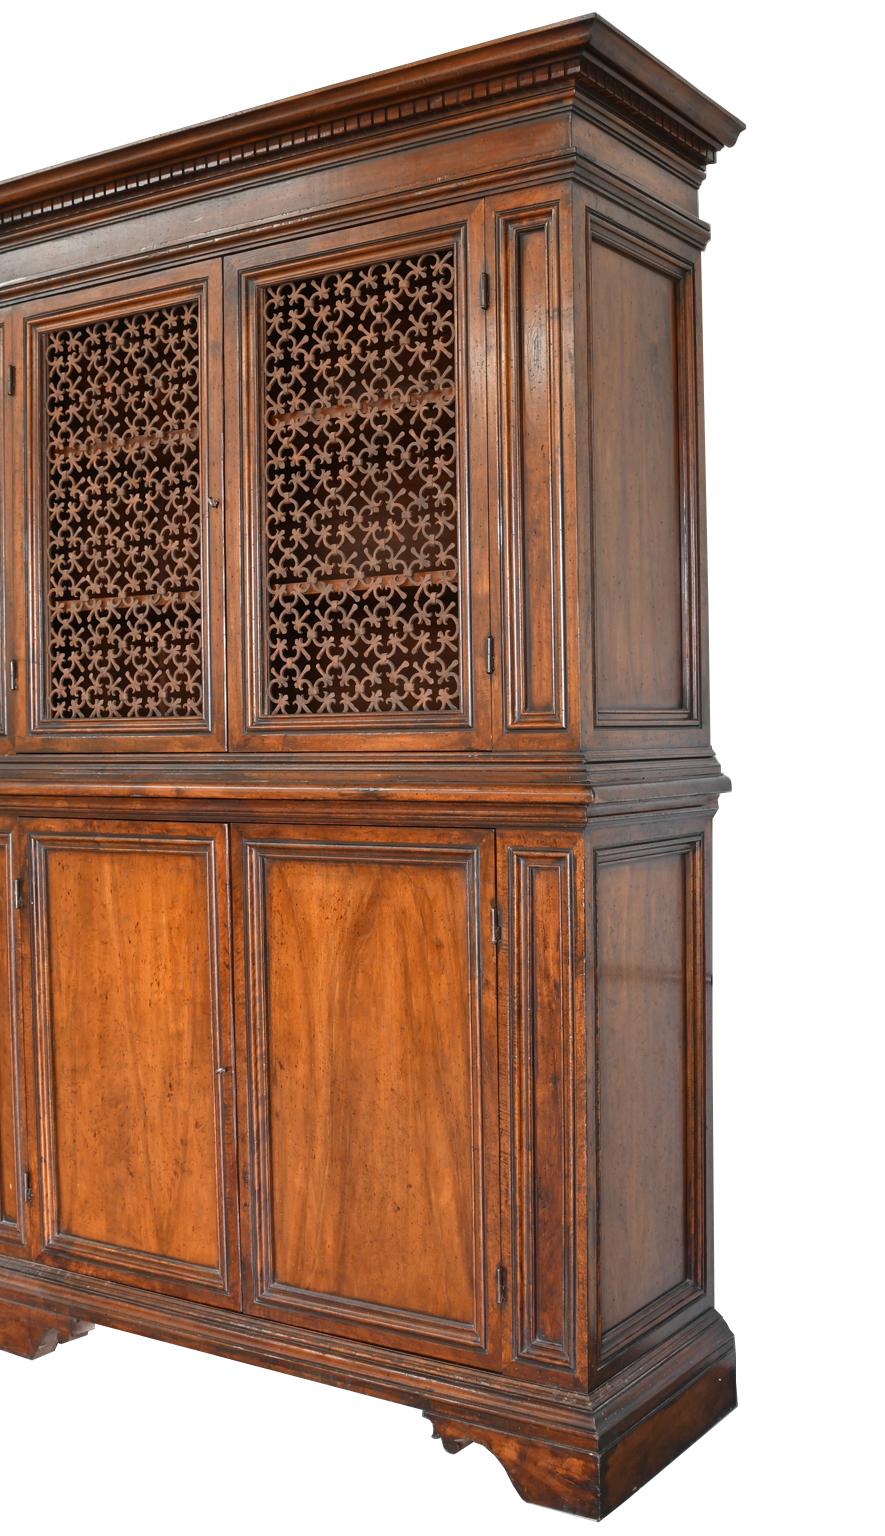 Contemporary Italian Renaissance Style Walnut Bookcase Cabinet with Iron Quatrefoil Panels